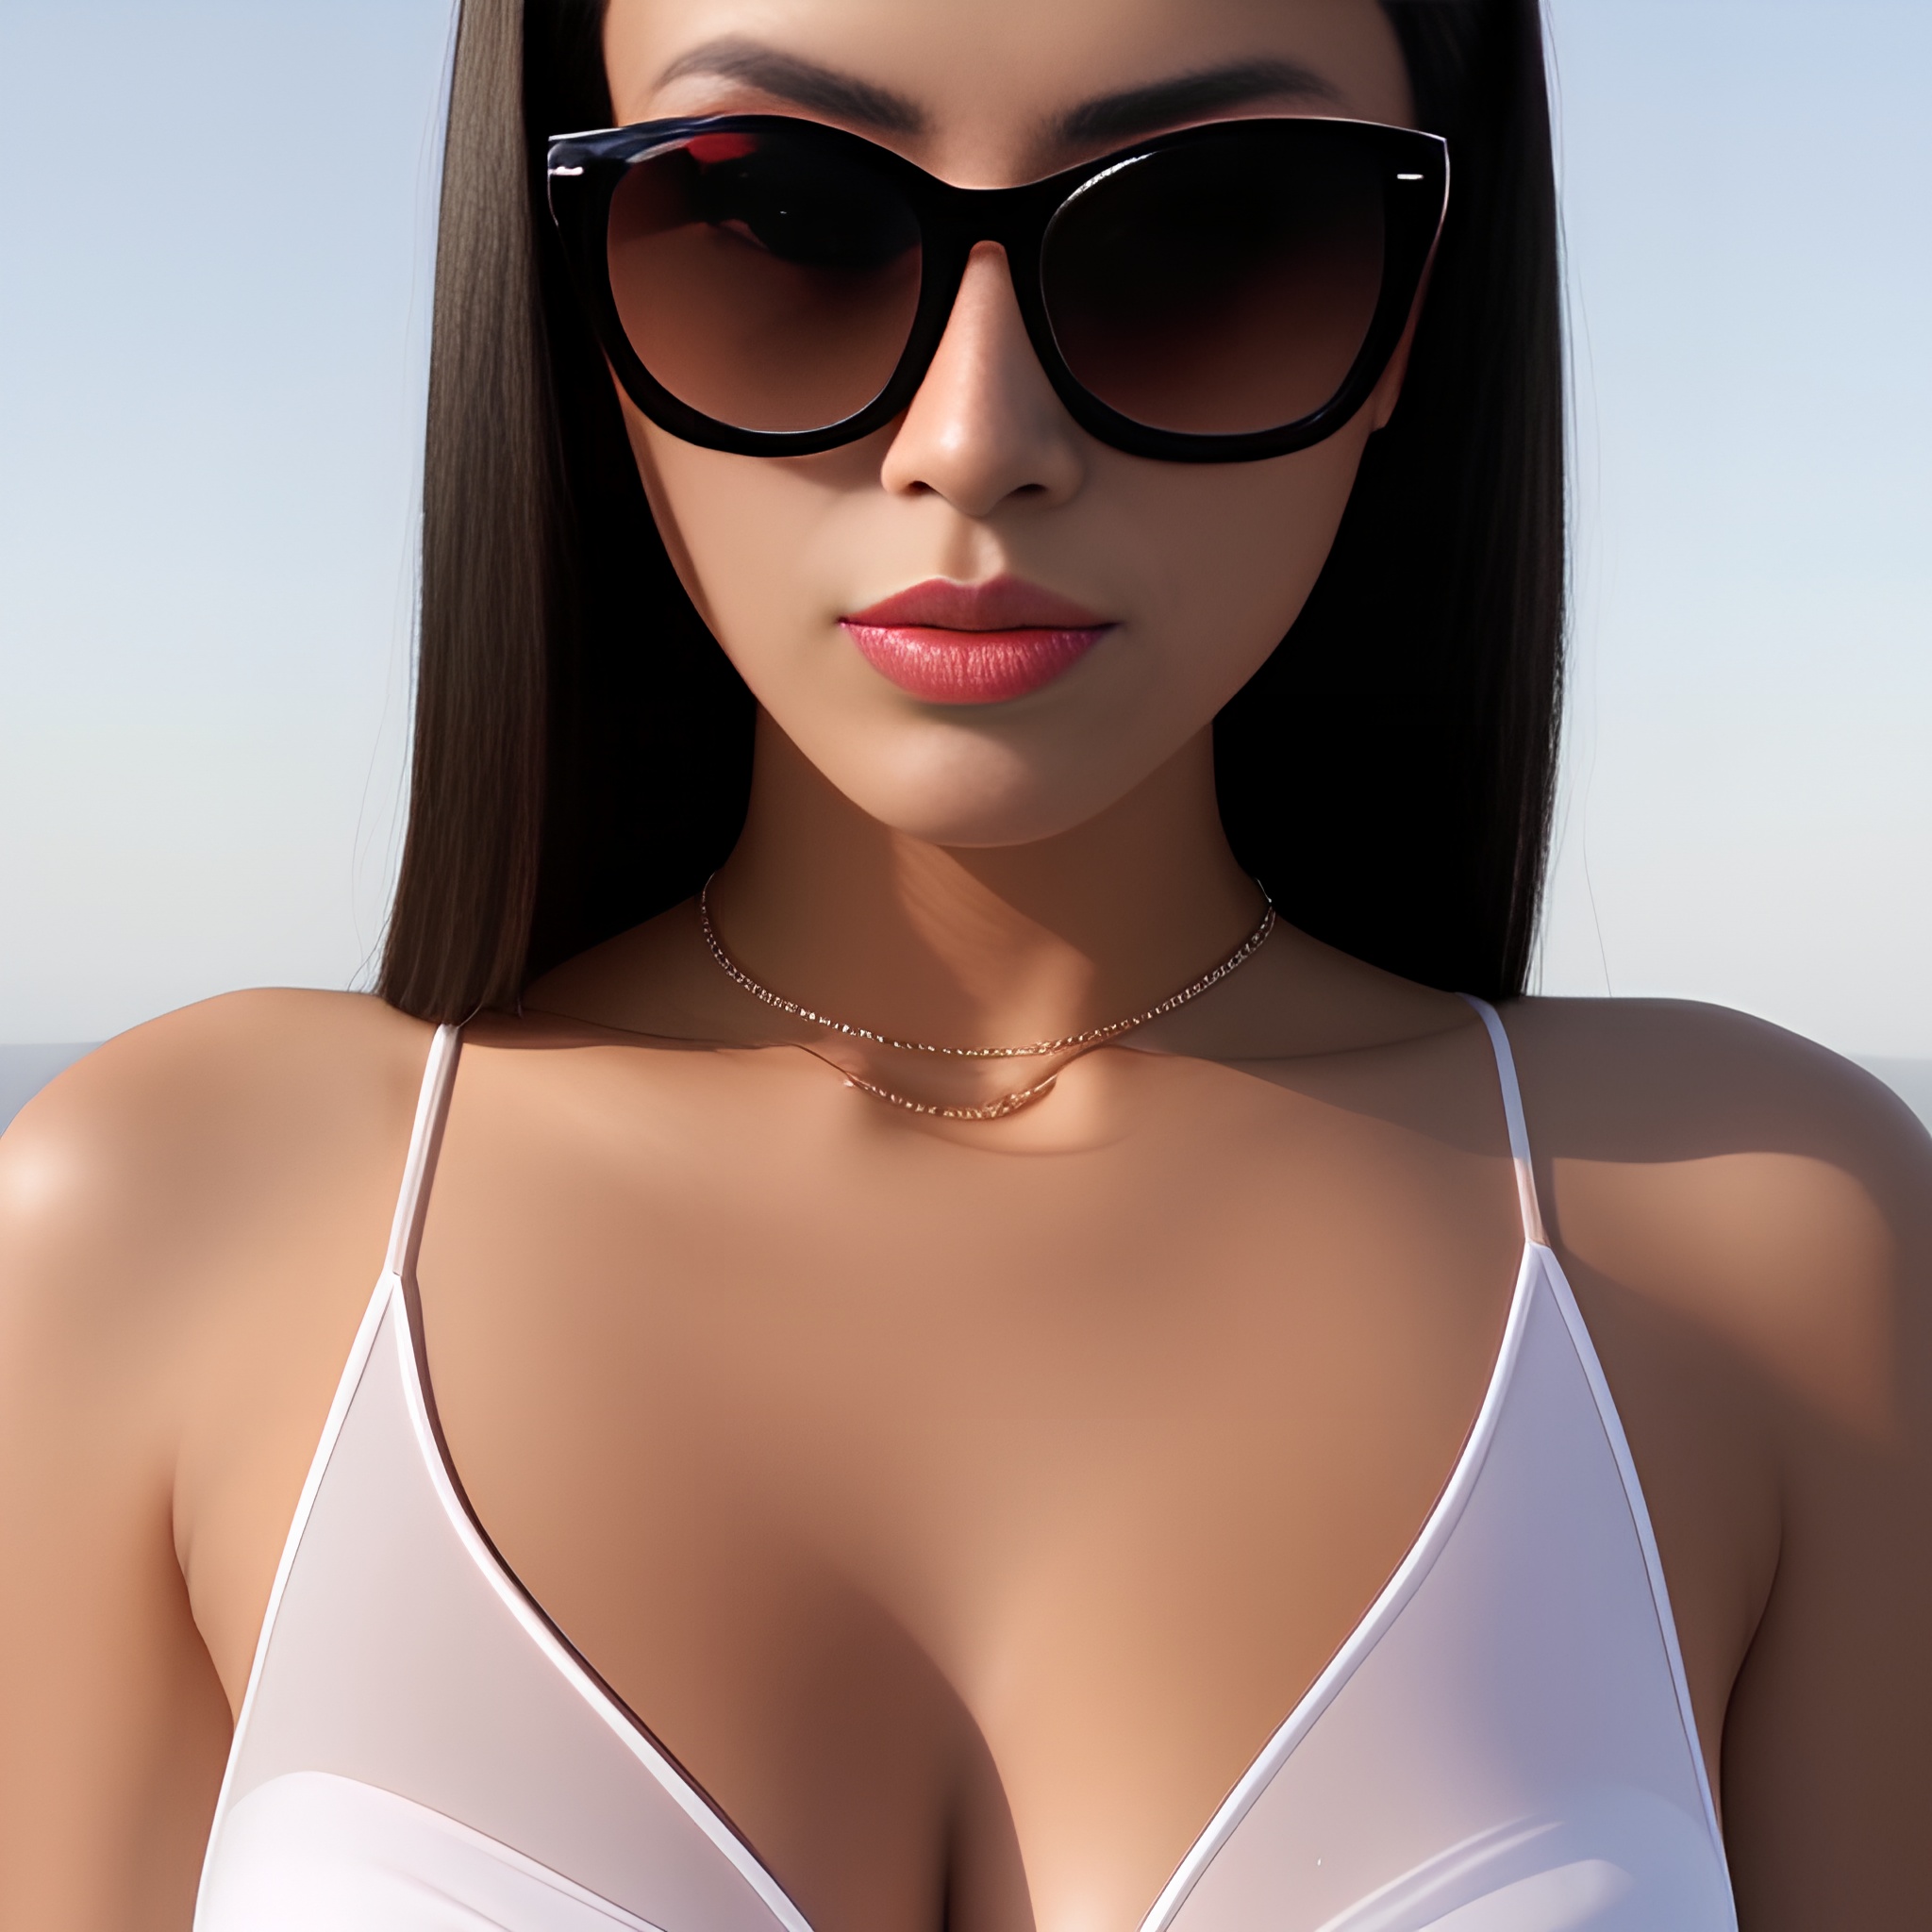 sunglasses sexy woman